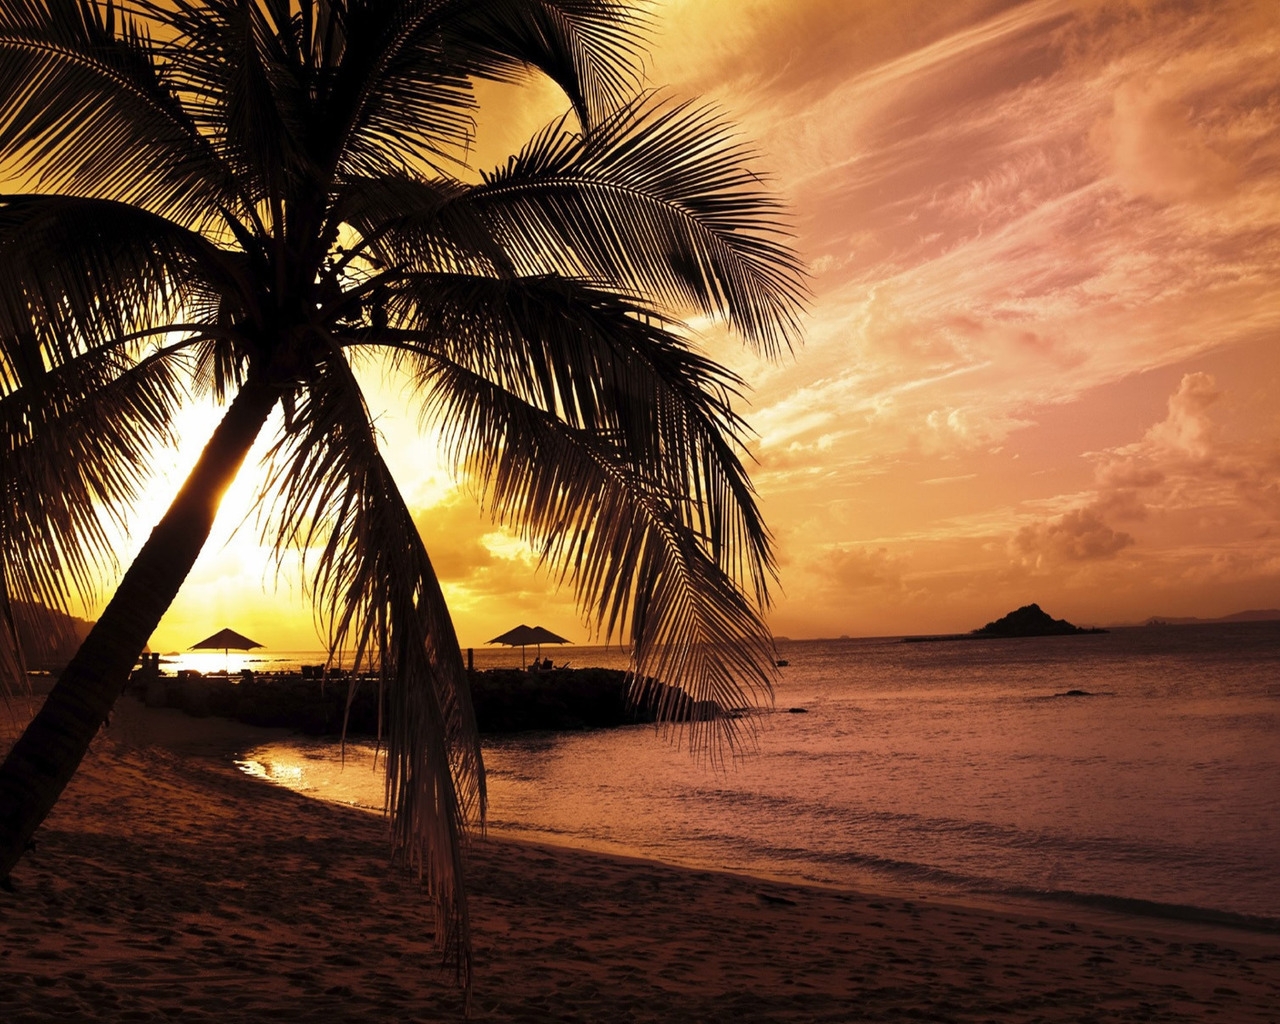 Beach Sunset for 1280 x 1024 resolution